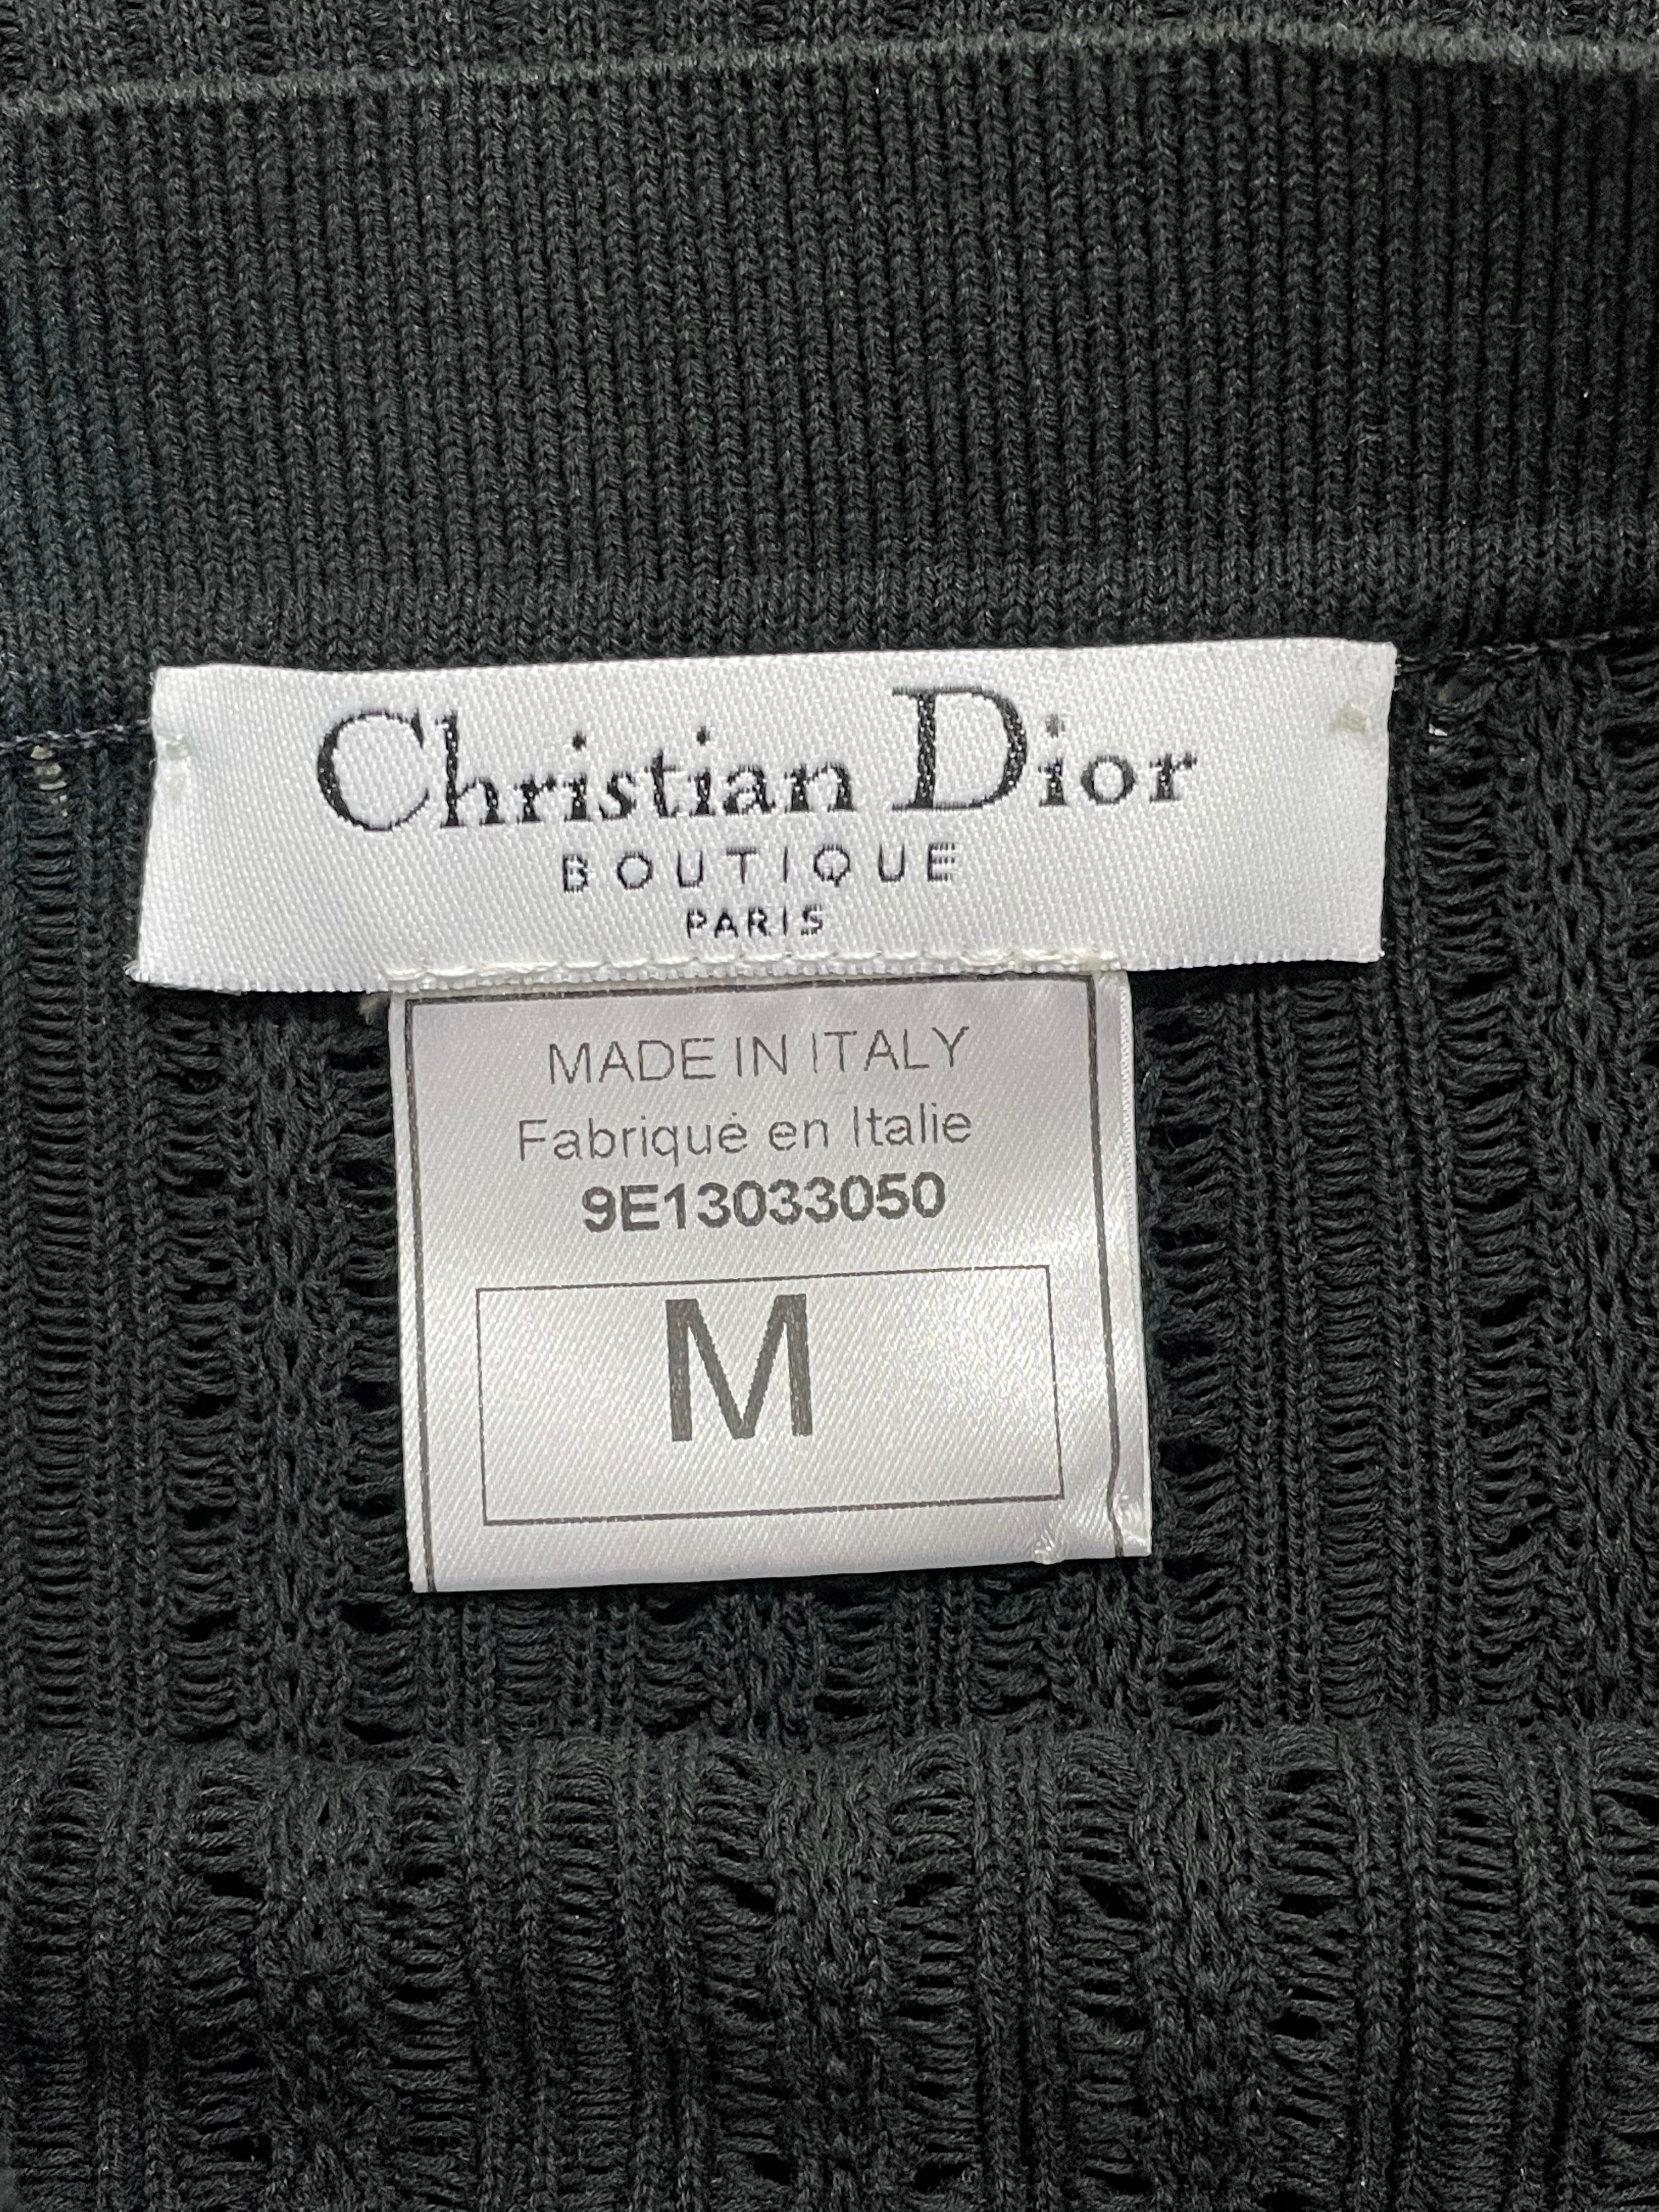 S/S 1999 Christian Dior John Galliano Black & White Knit Chevron Trumpet Skirt In Good Condition In Yukon, OK